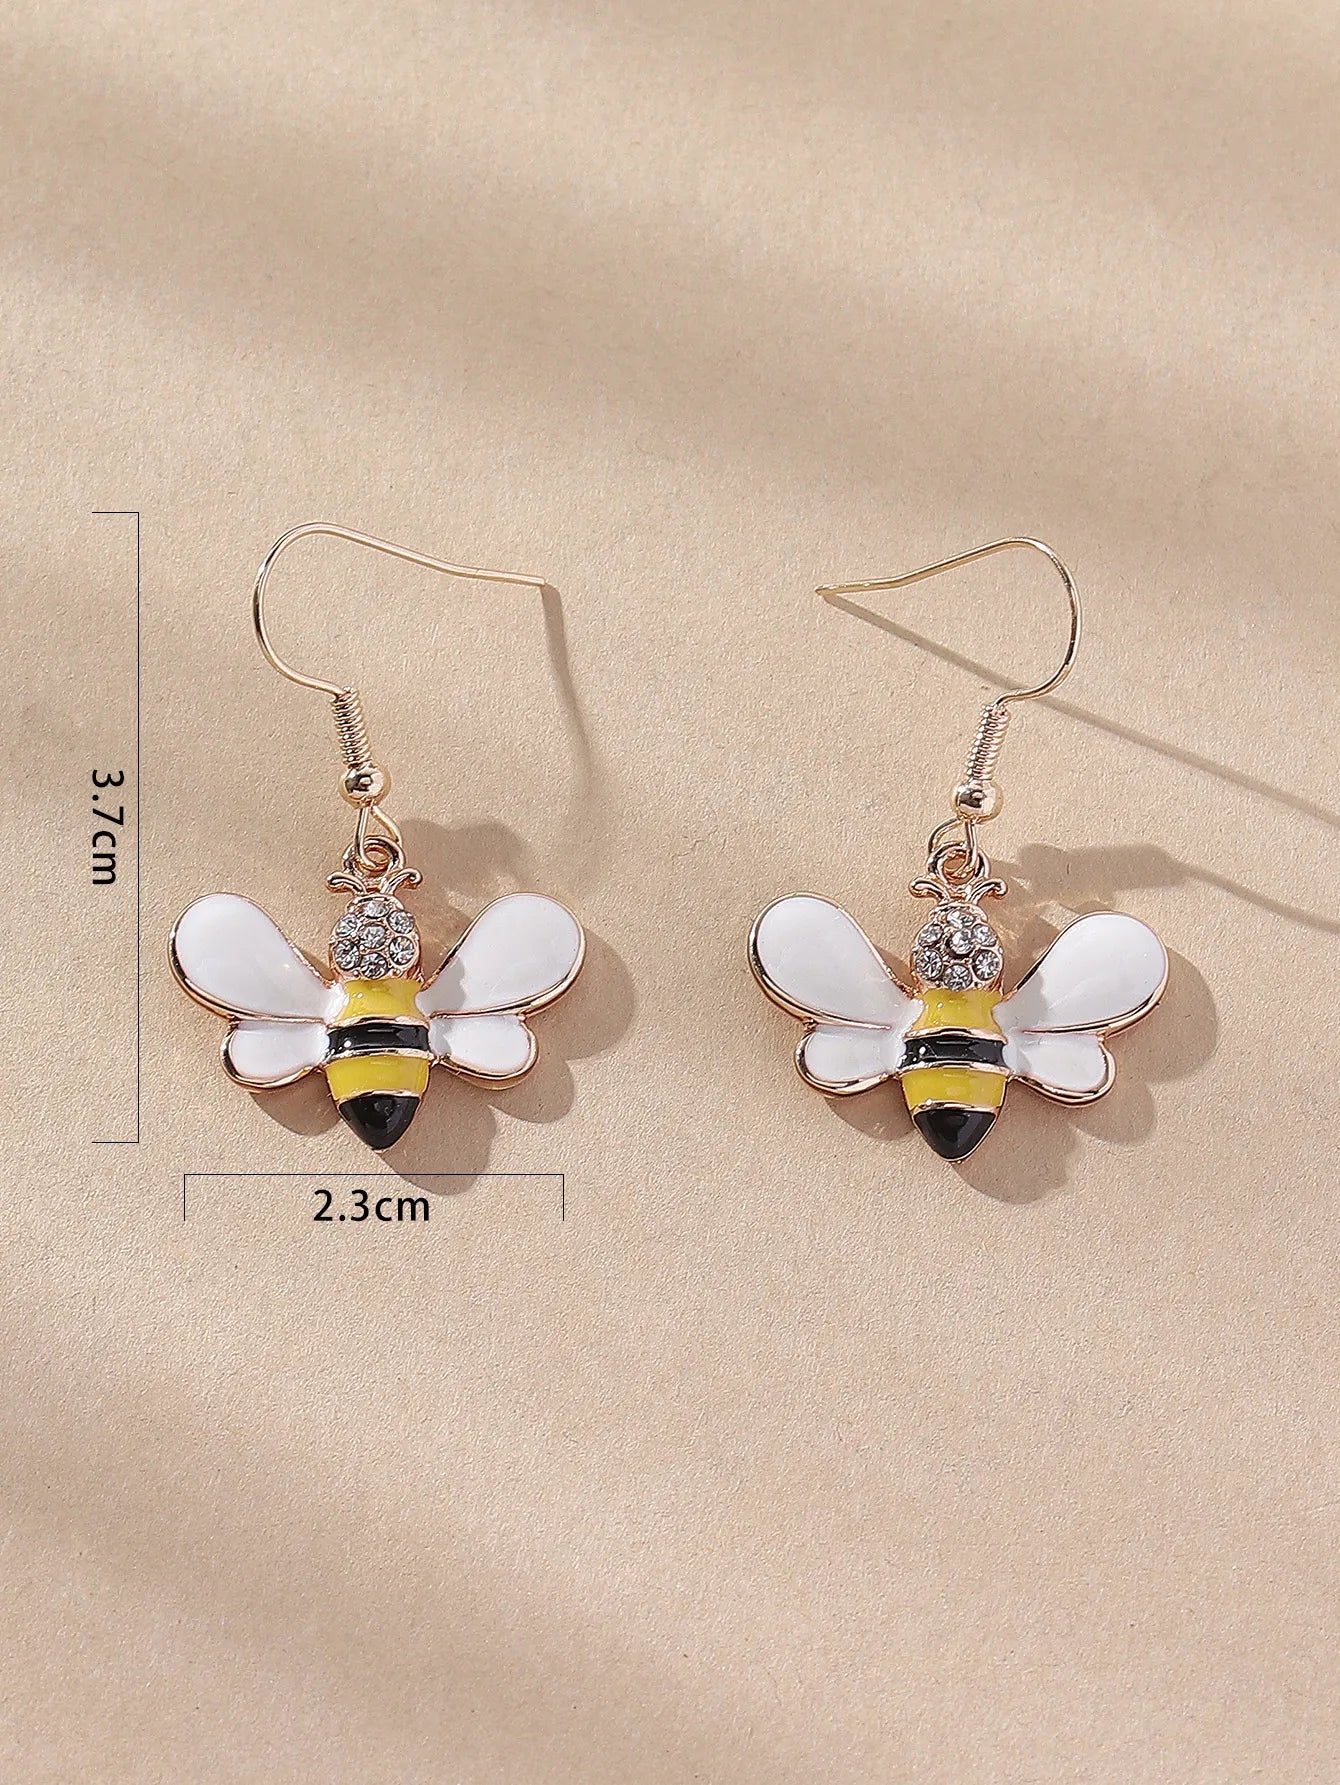 Bee Shaped Fishhook Earrings with bling